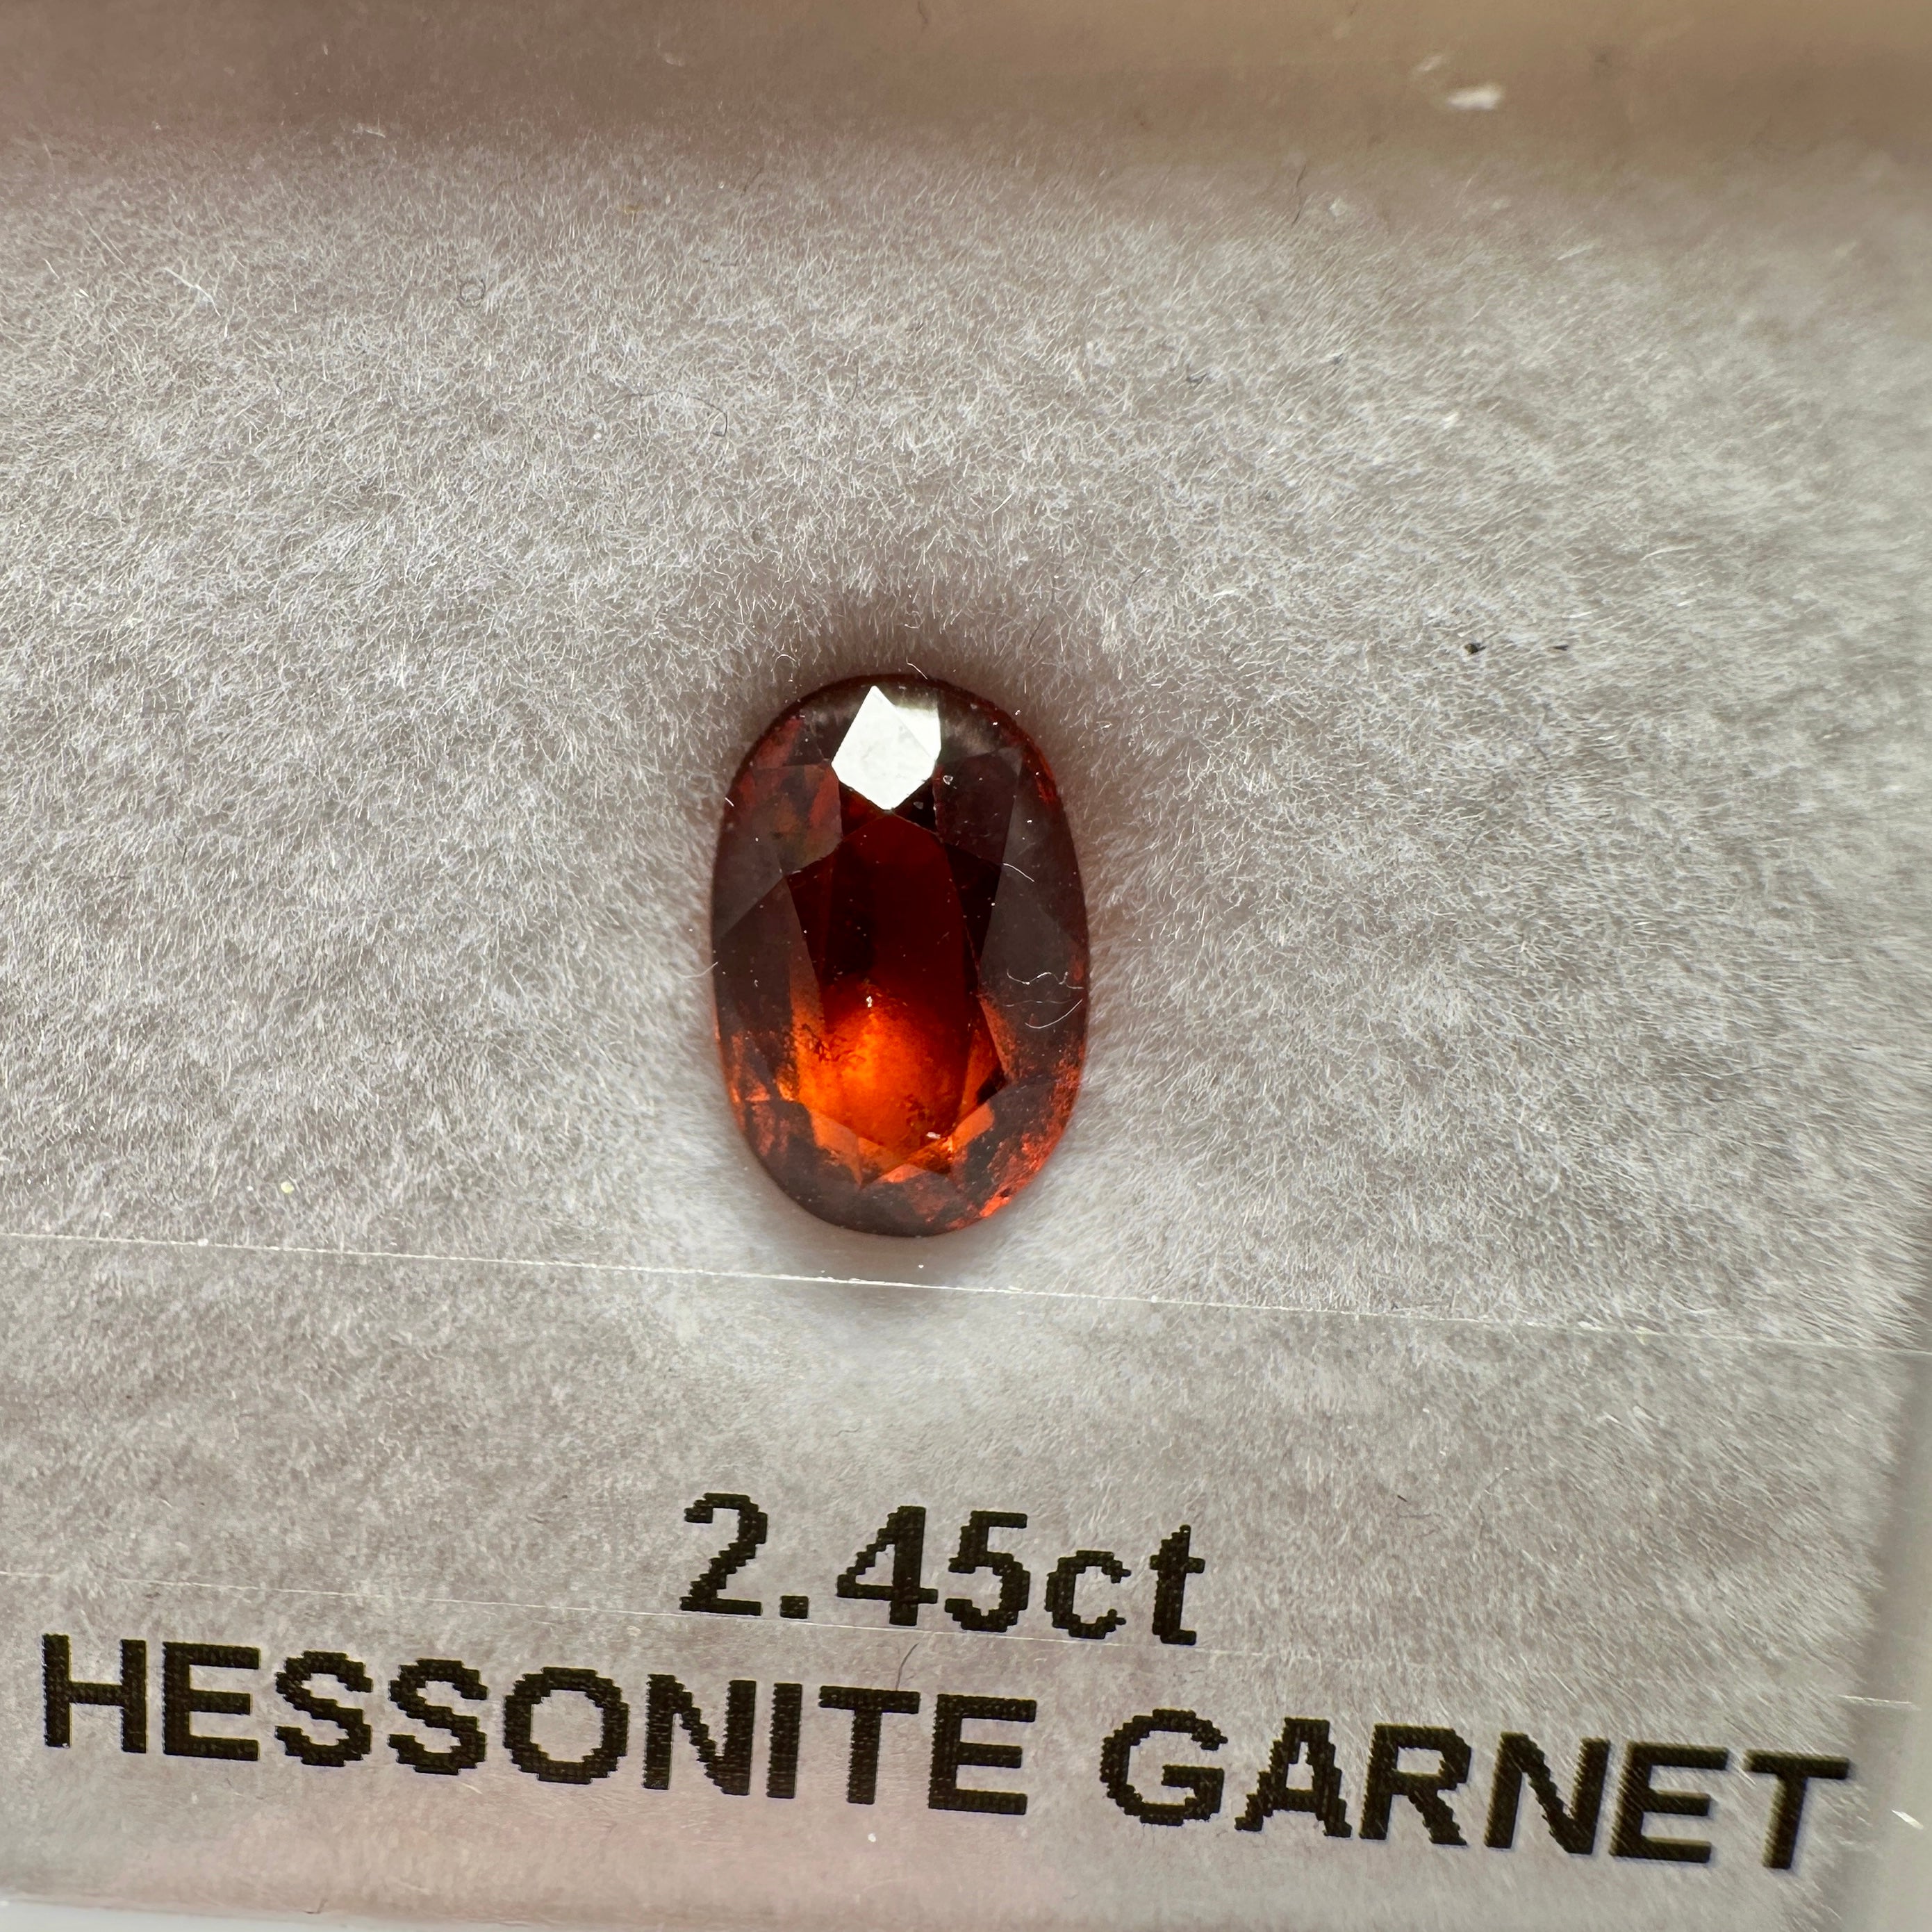 2.45ct Hessonite Garnet, Untreated Unheated, native cut